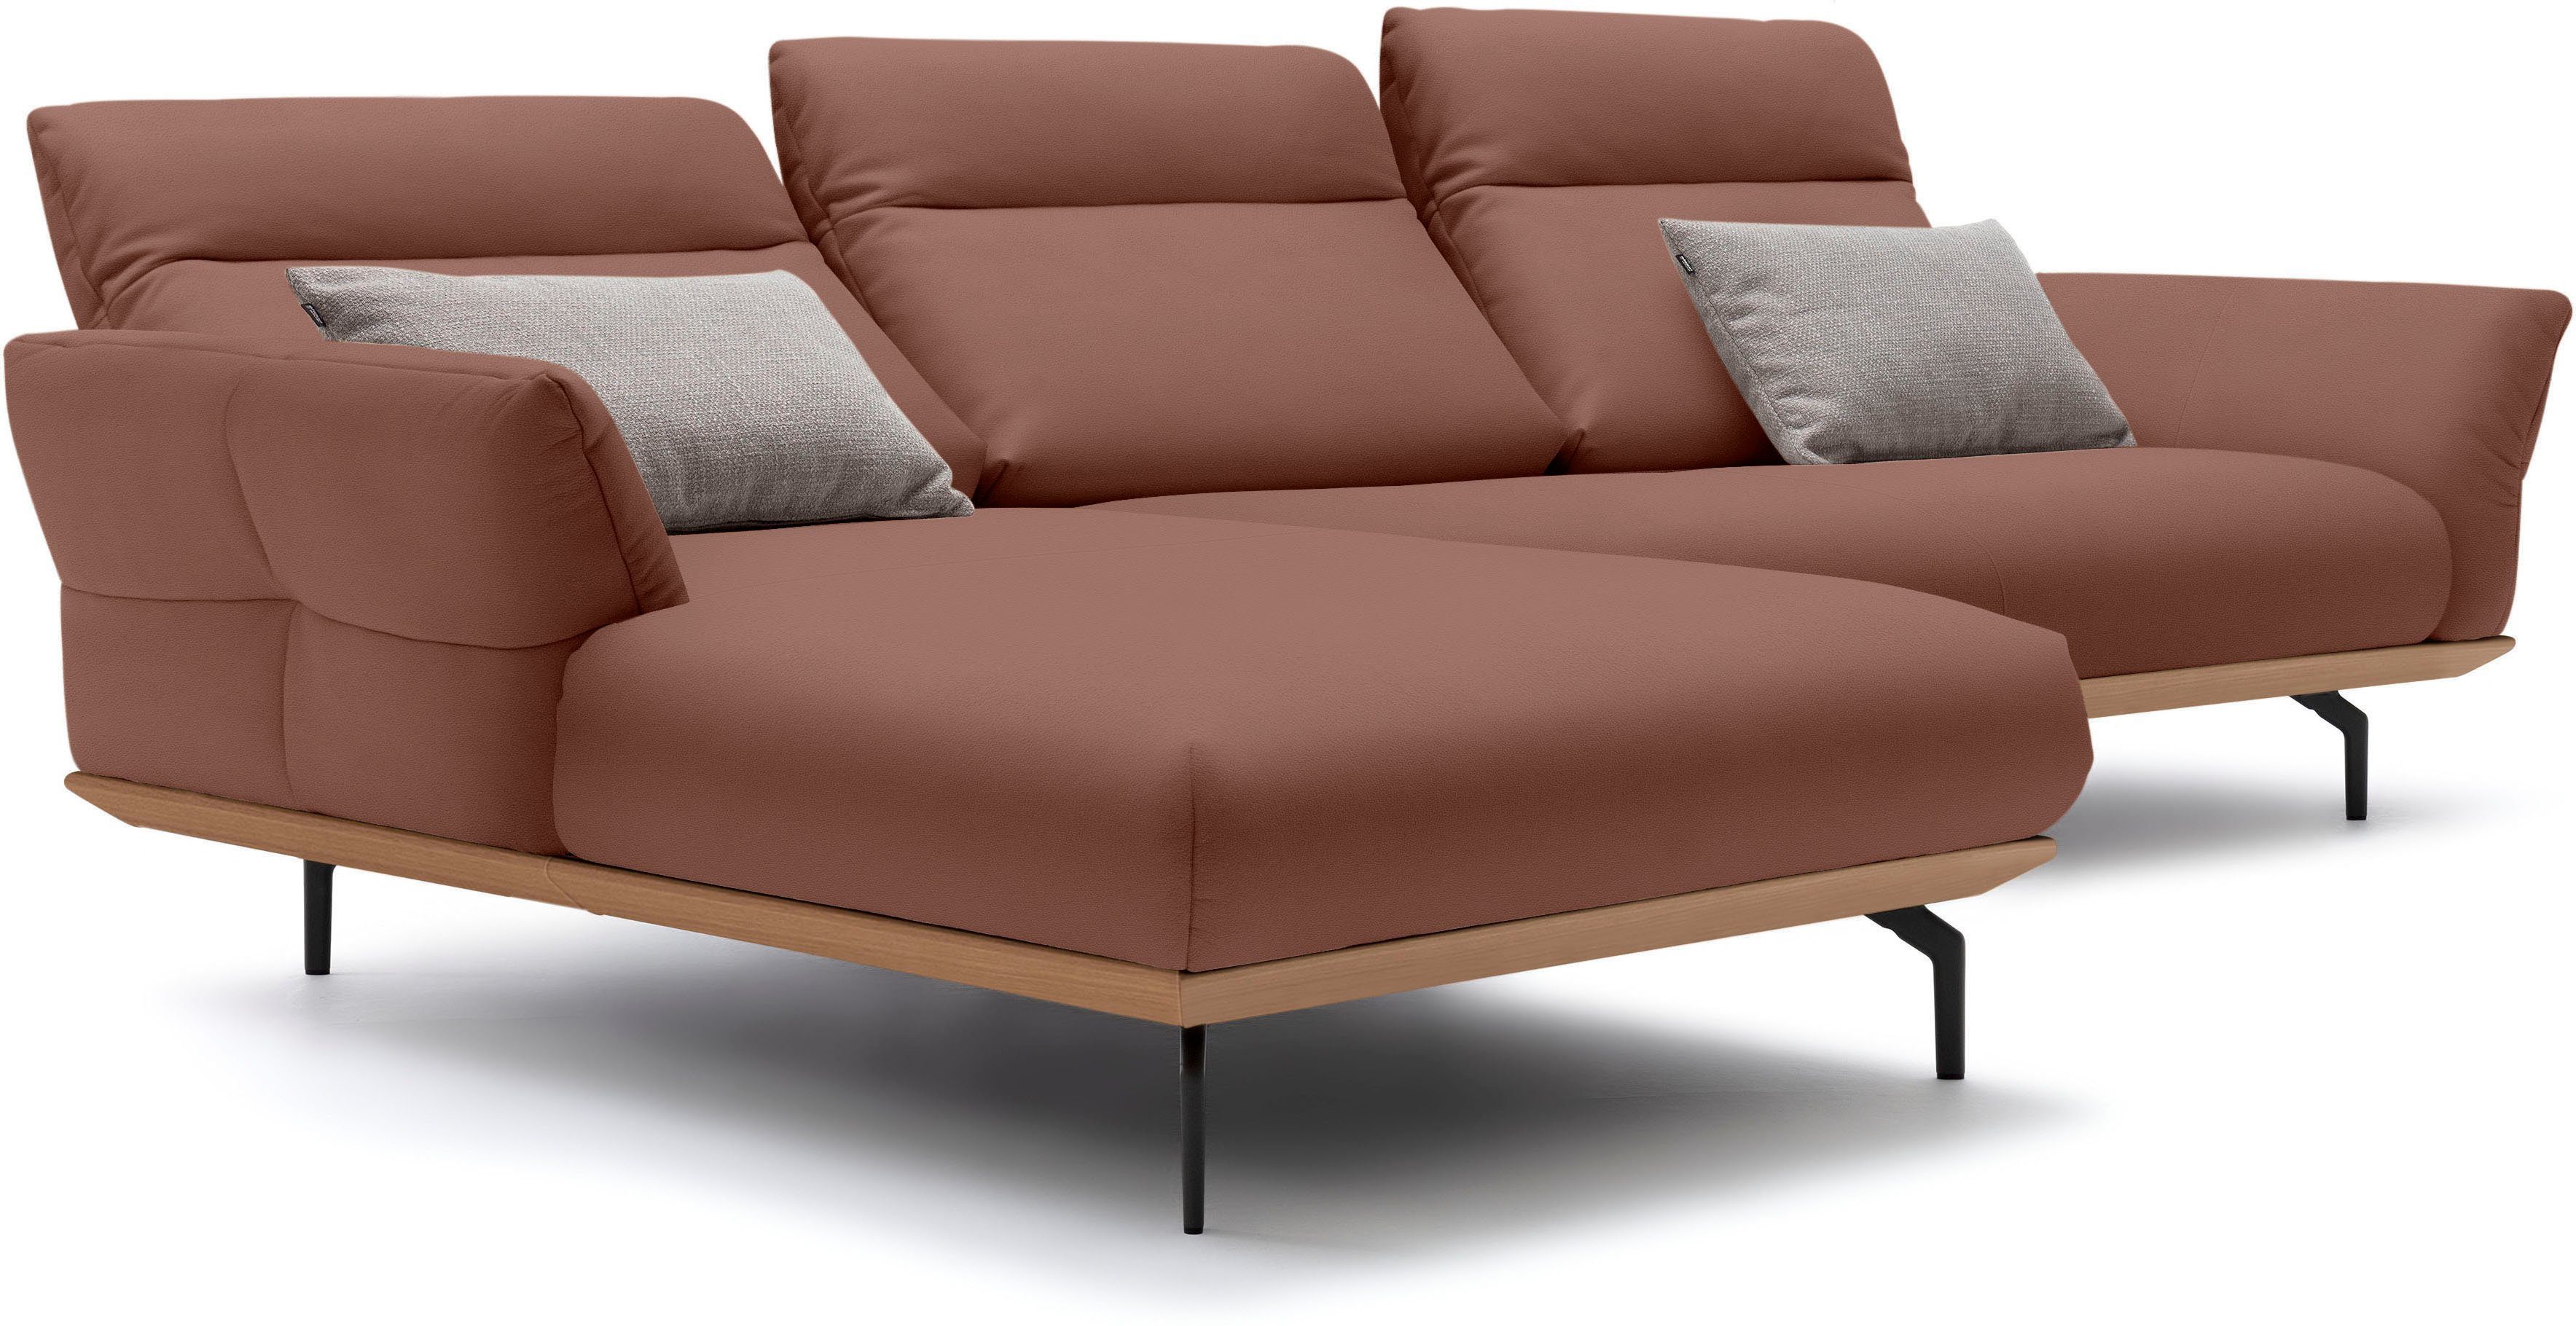 hs.460, hülsta sofa 318 Sockel in Ecksofa Umbragrau, in cm Winkelfüße Breite Eiche,